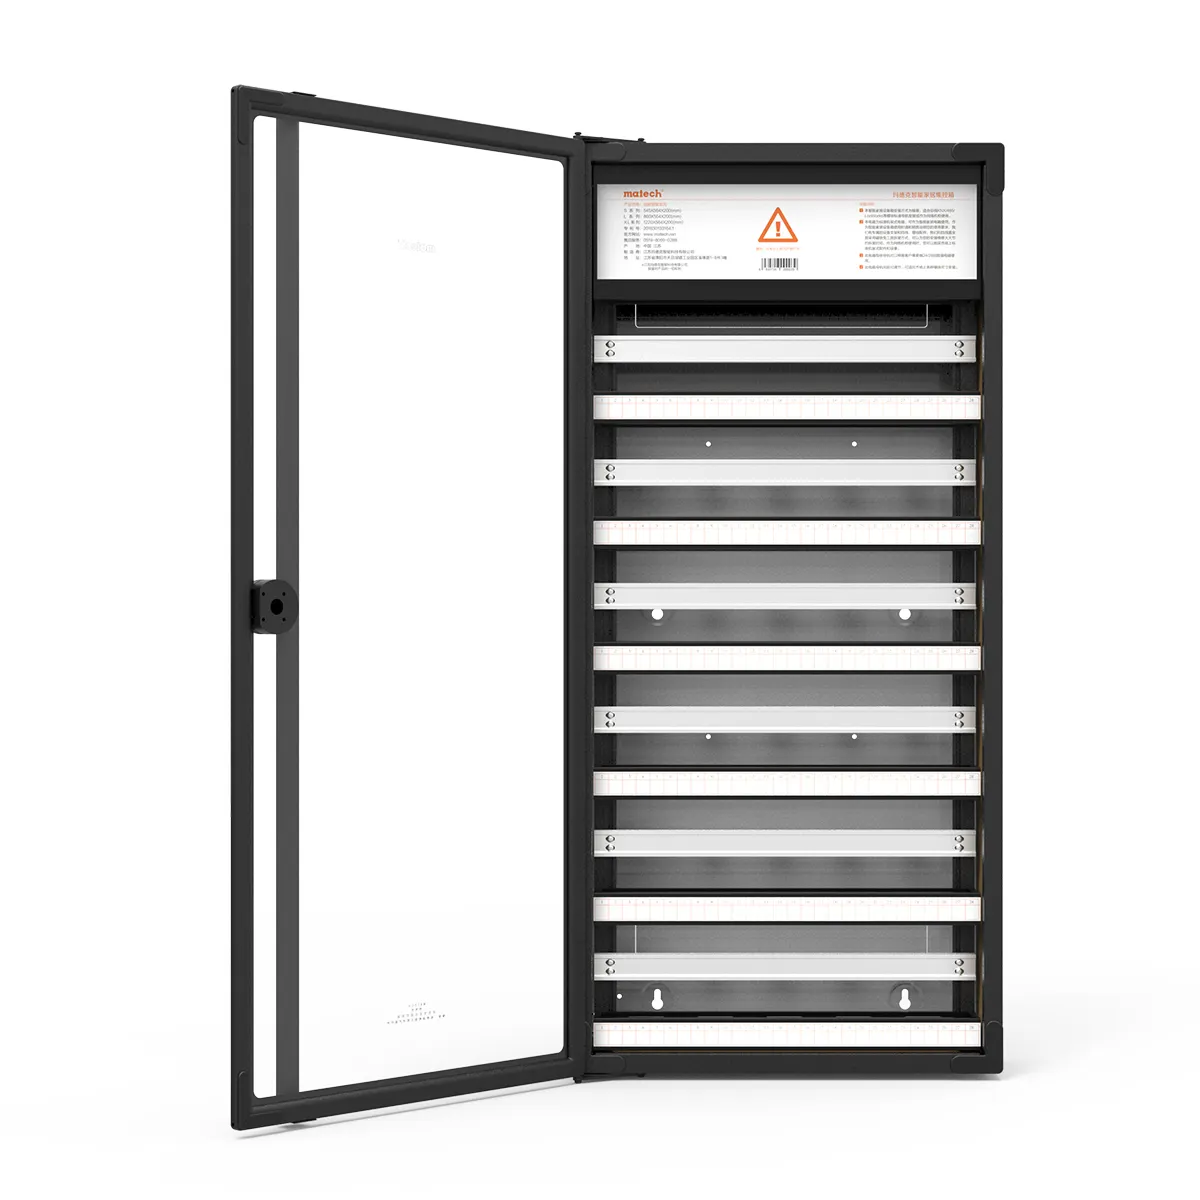 Matech, superficie montada XL,26U 168p 6 filas 19 'Rack armario de red caja de distribución de metal para smart home